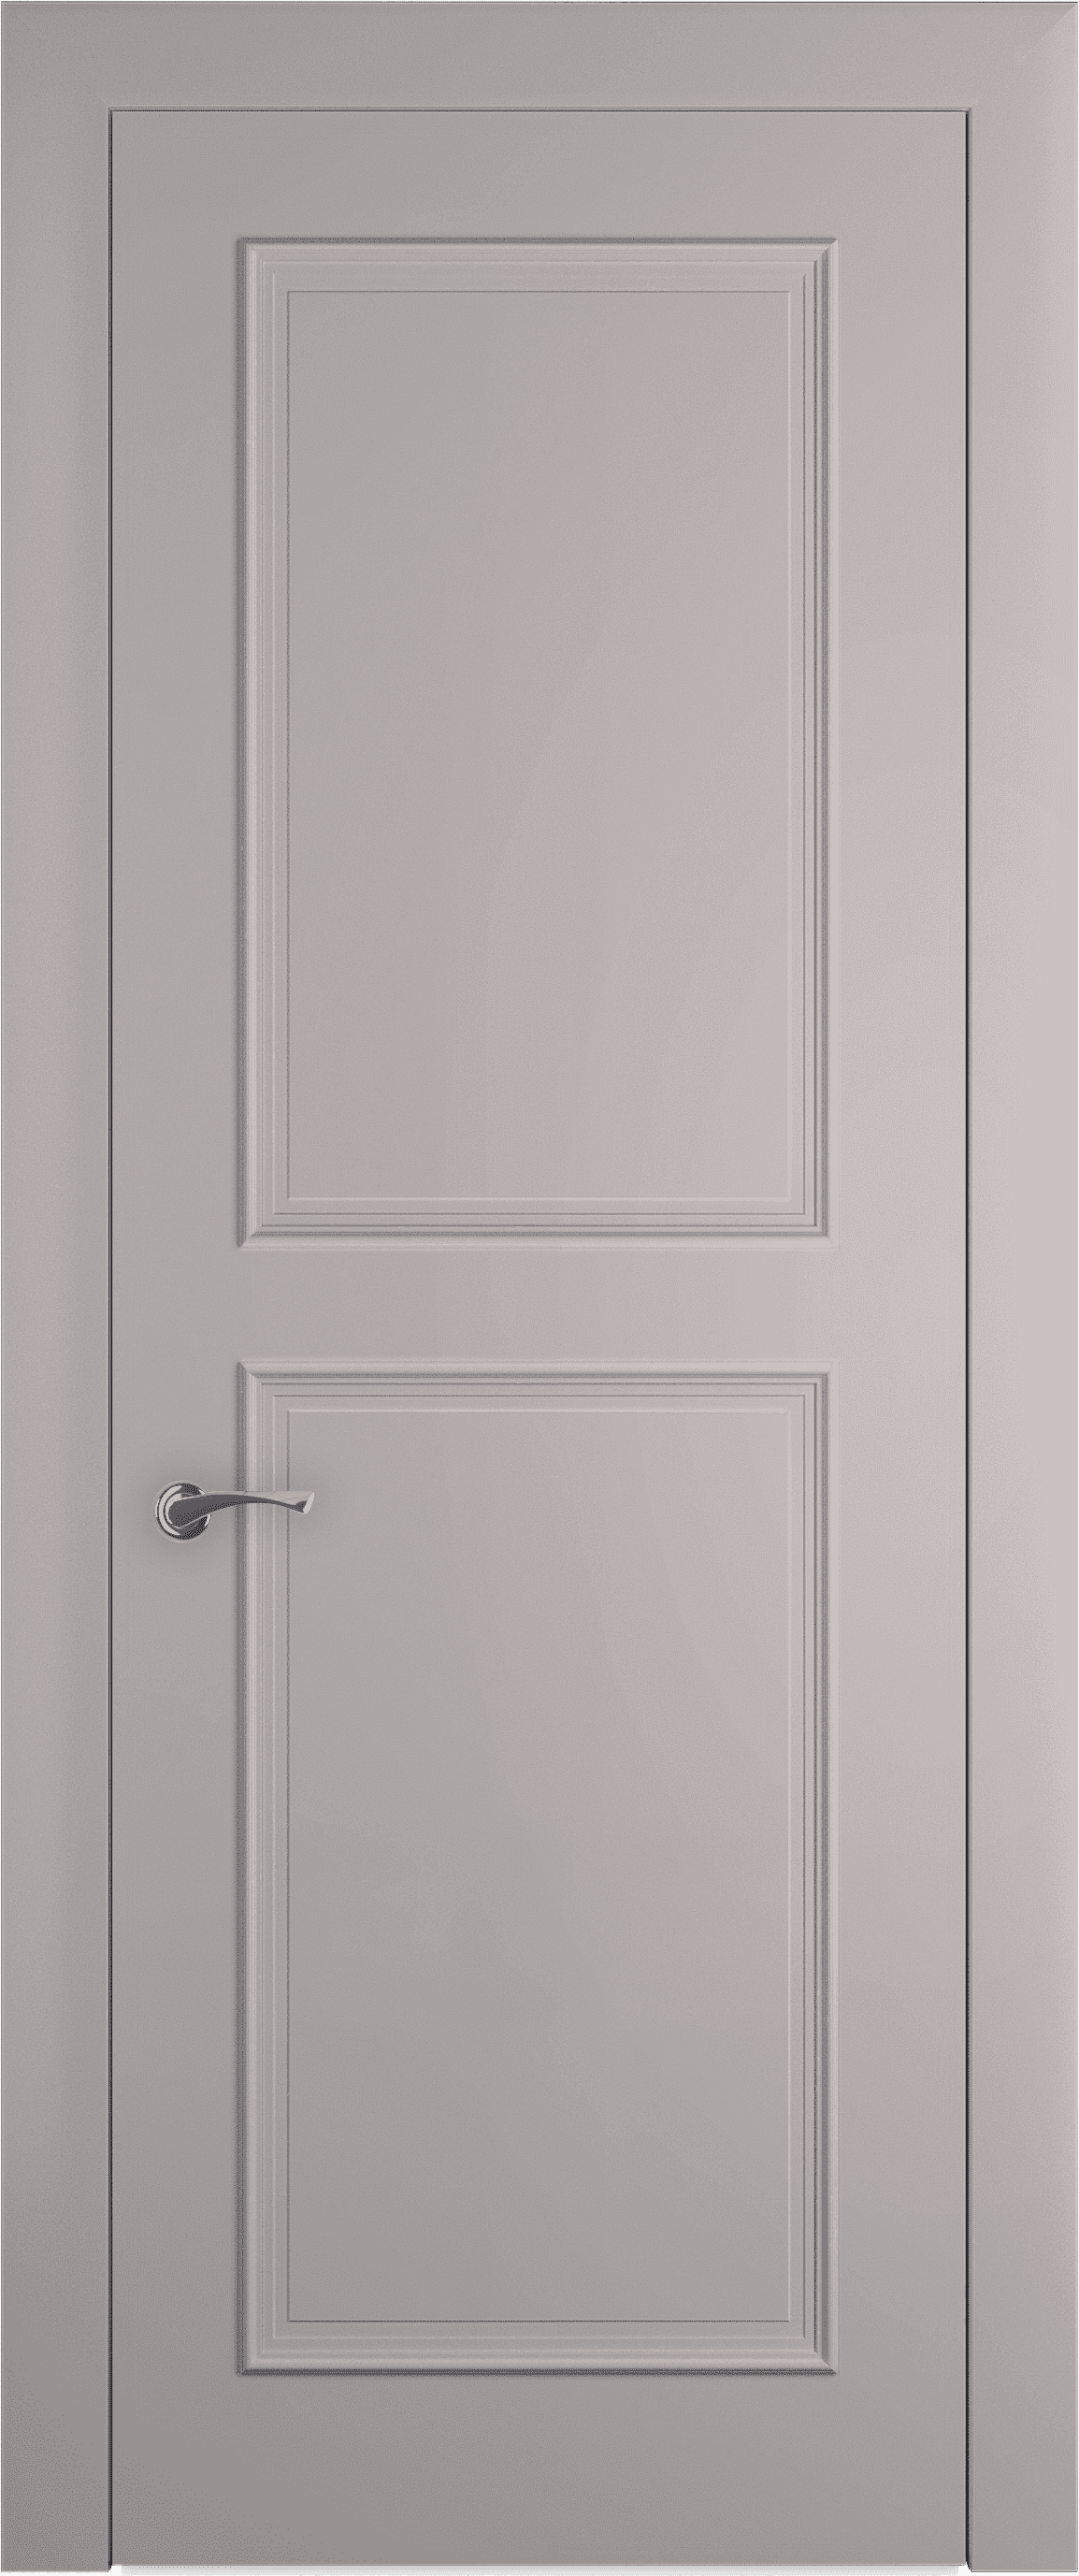 Межкомнатная дверь Ника багет 9